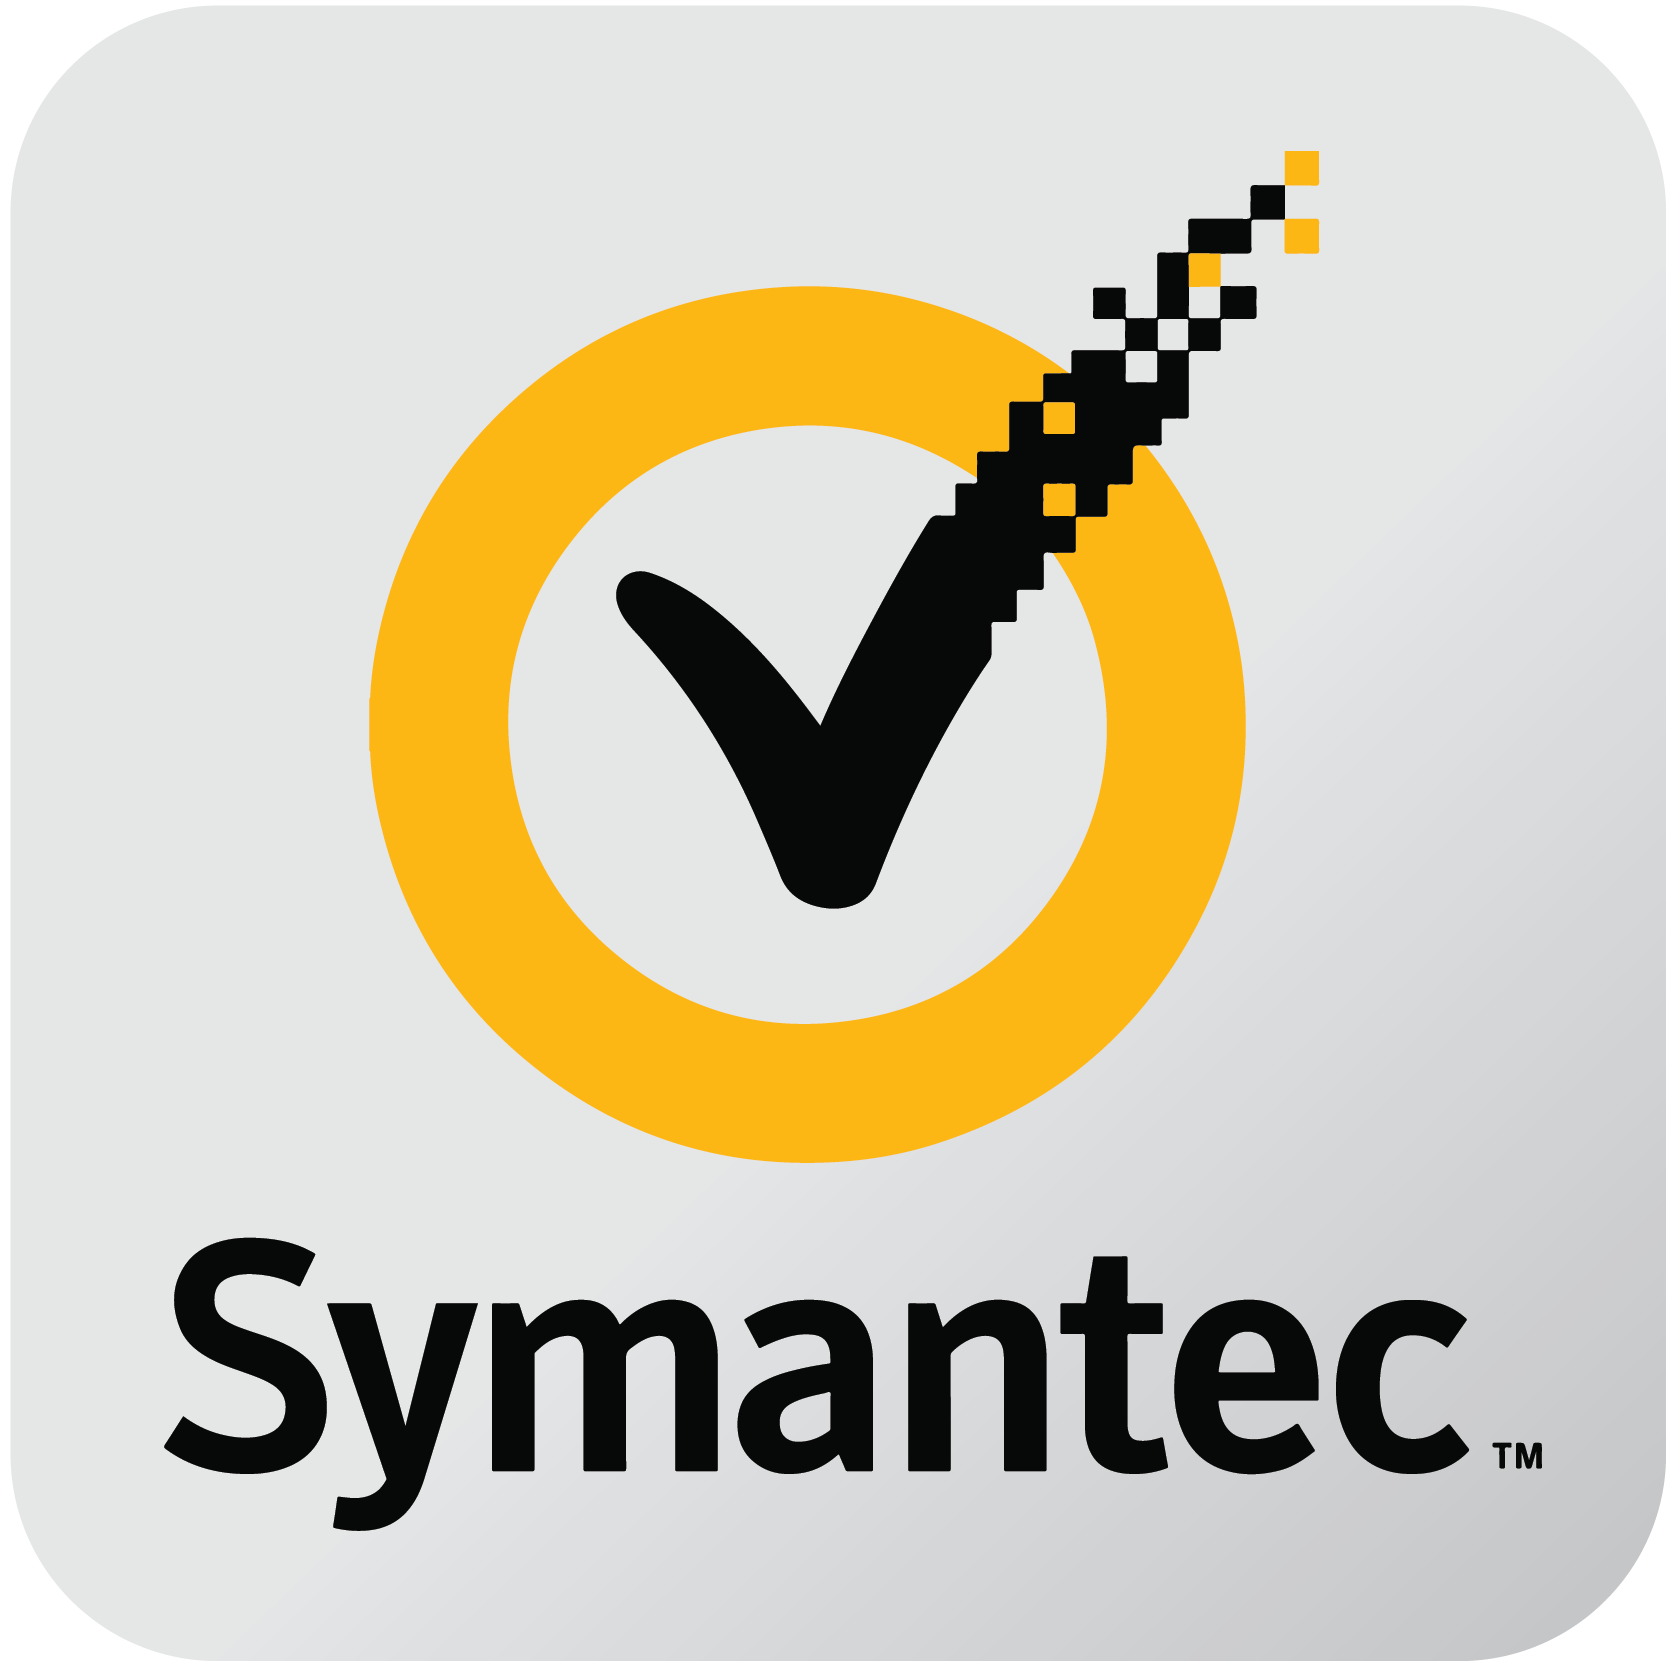 Nessus symantec antivirus software detection and status